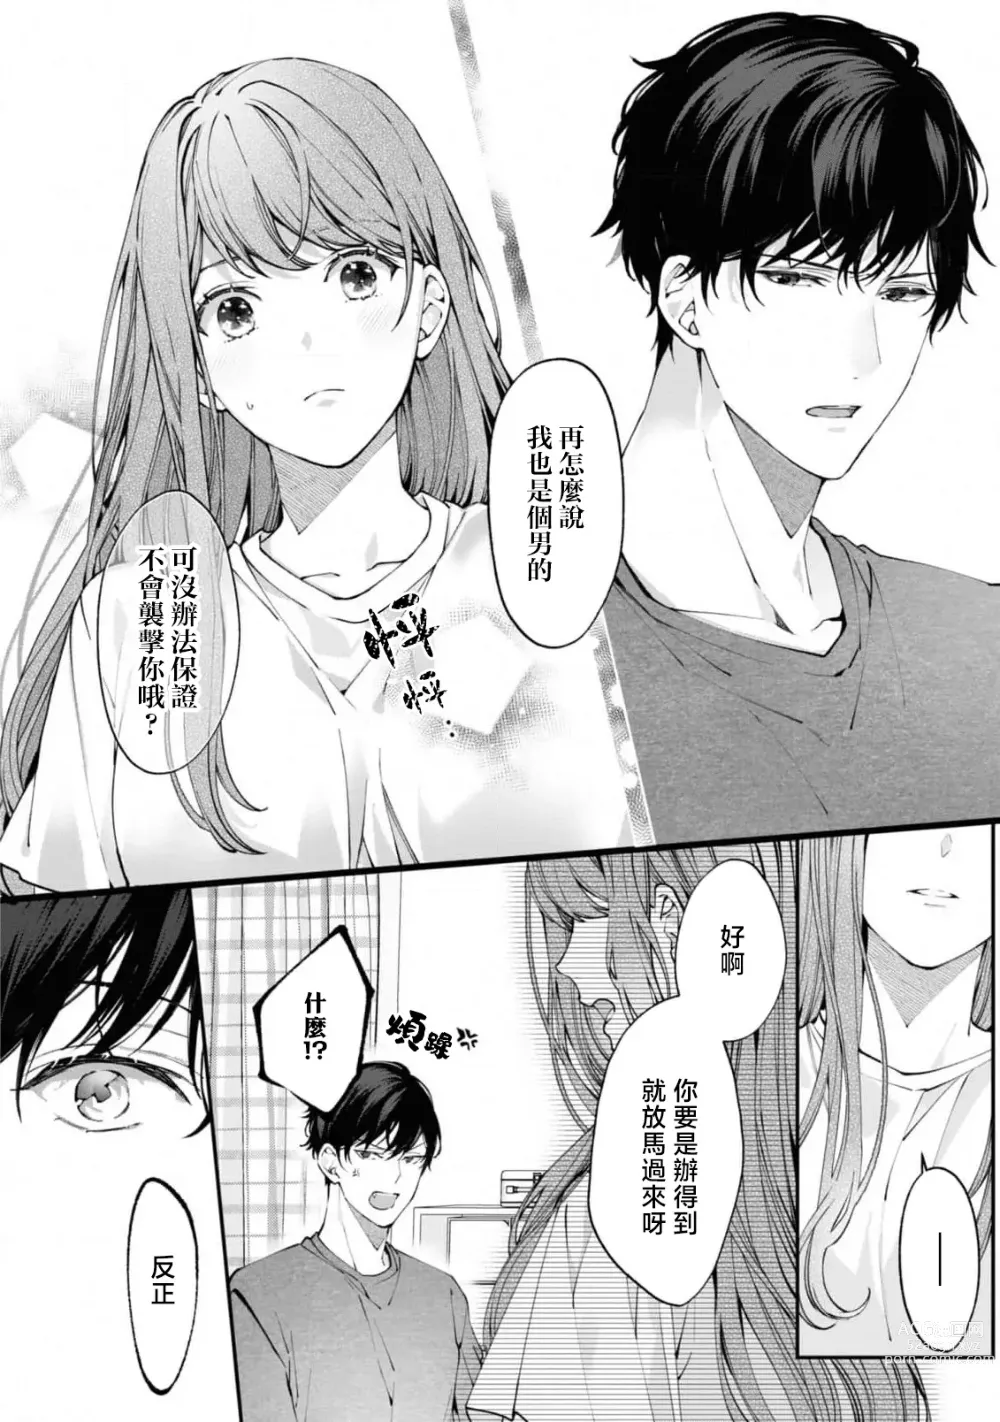 Page 7 of manga 「命运之恋近在咫尺～沉醉于好友的技巧之中～」